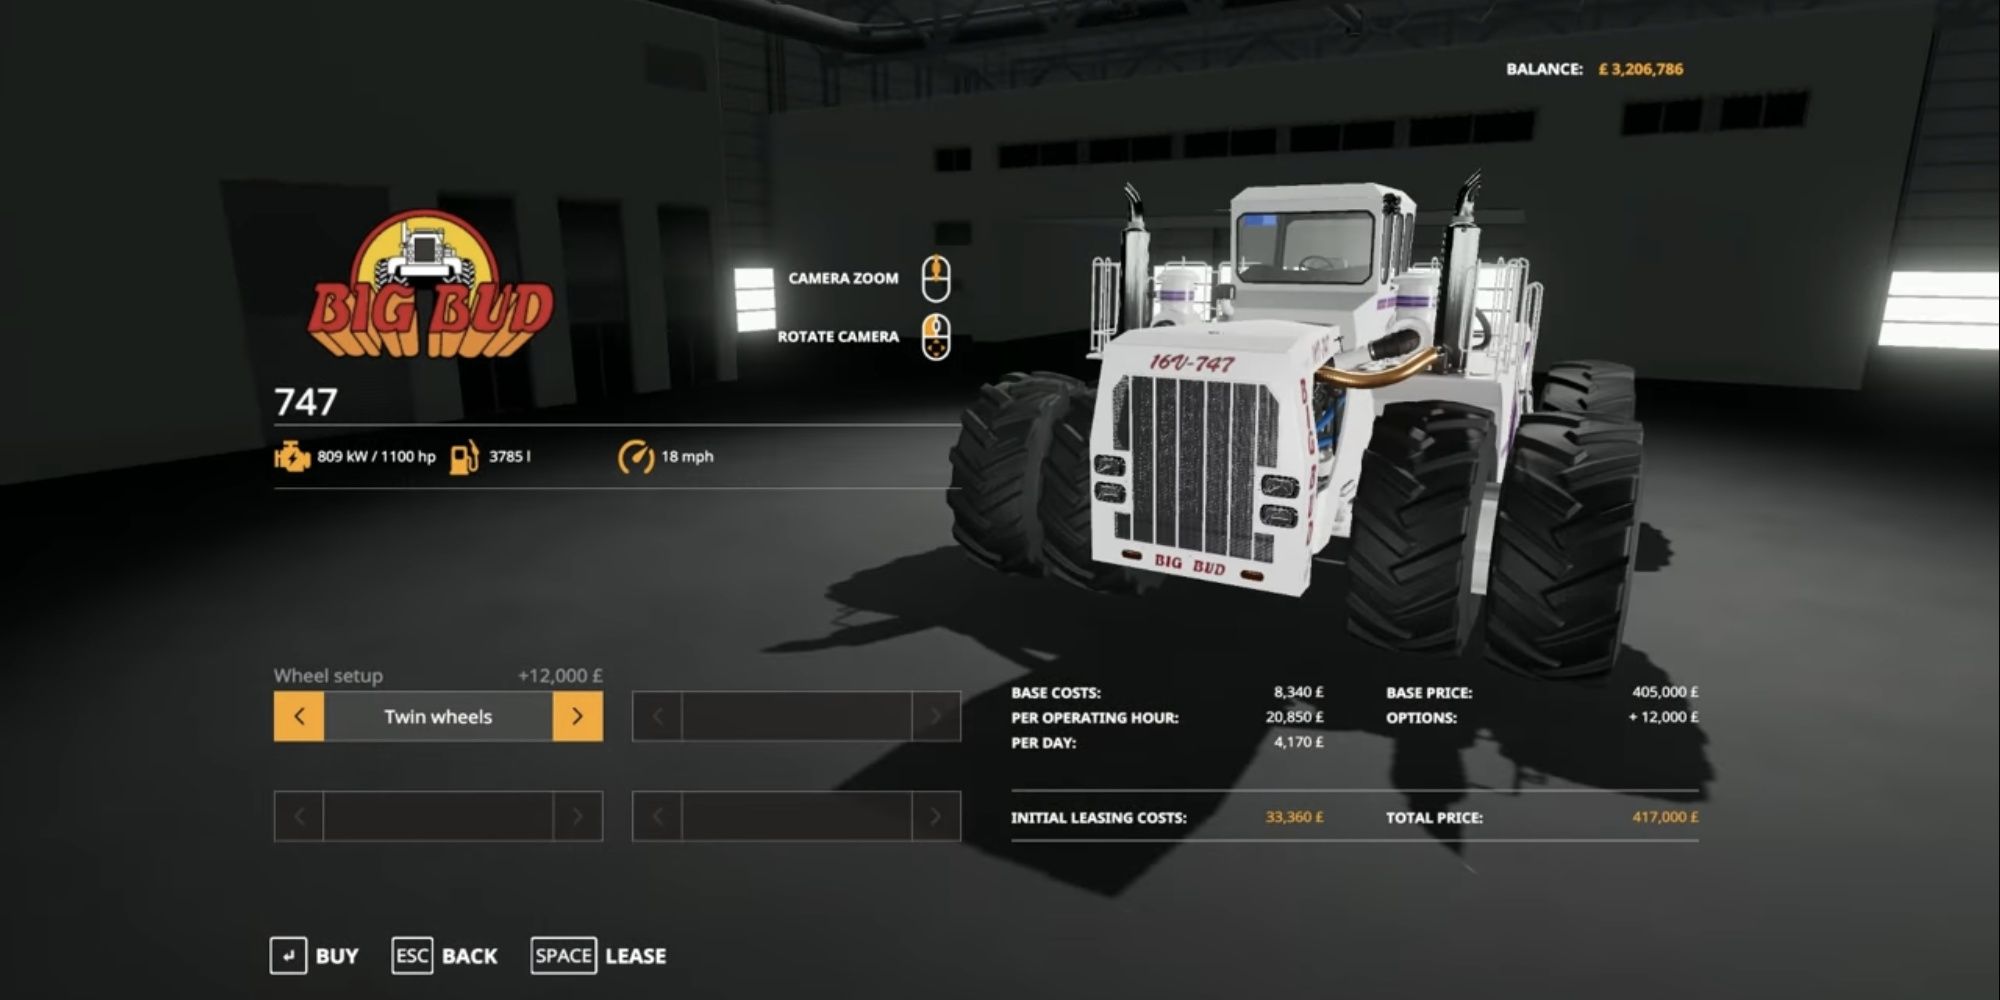 The Big Bud 747 tractor for Farming Simulator 19 mod